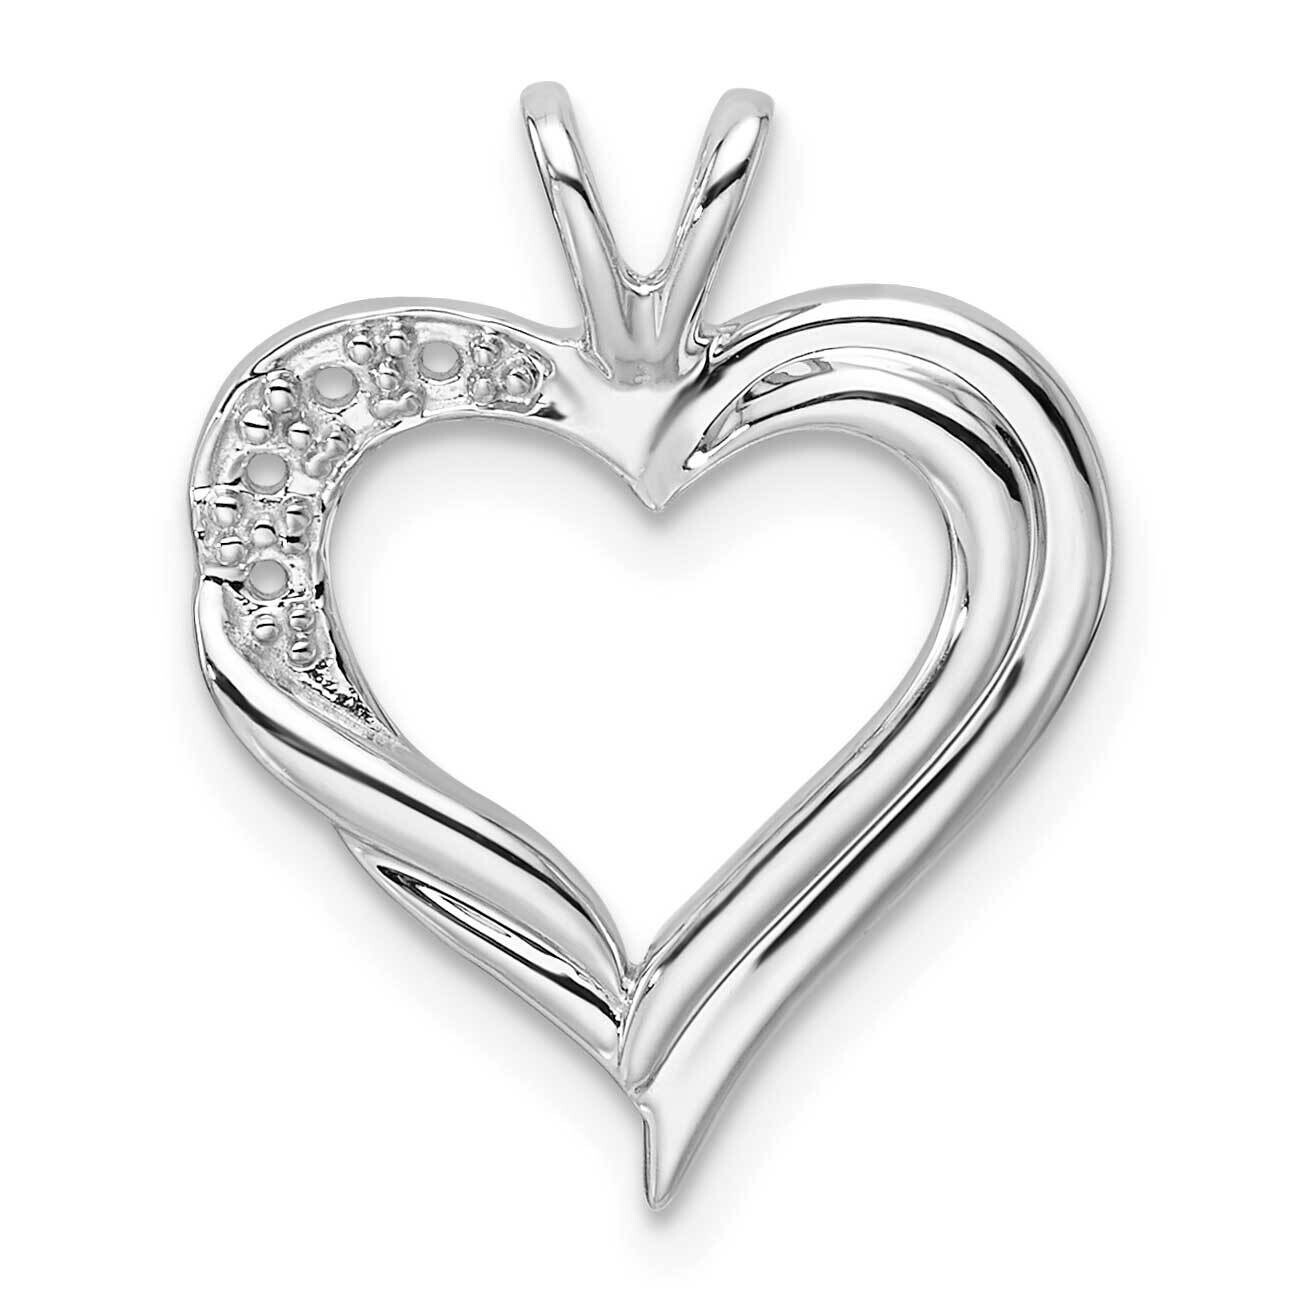 Fancy Heart Pendant Mounting 14k White Gold PM4844-005-W